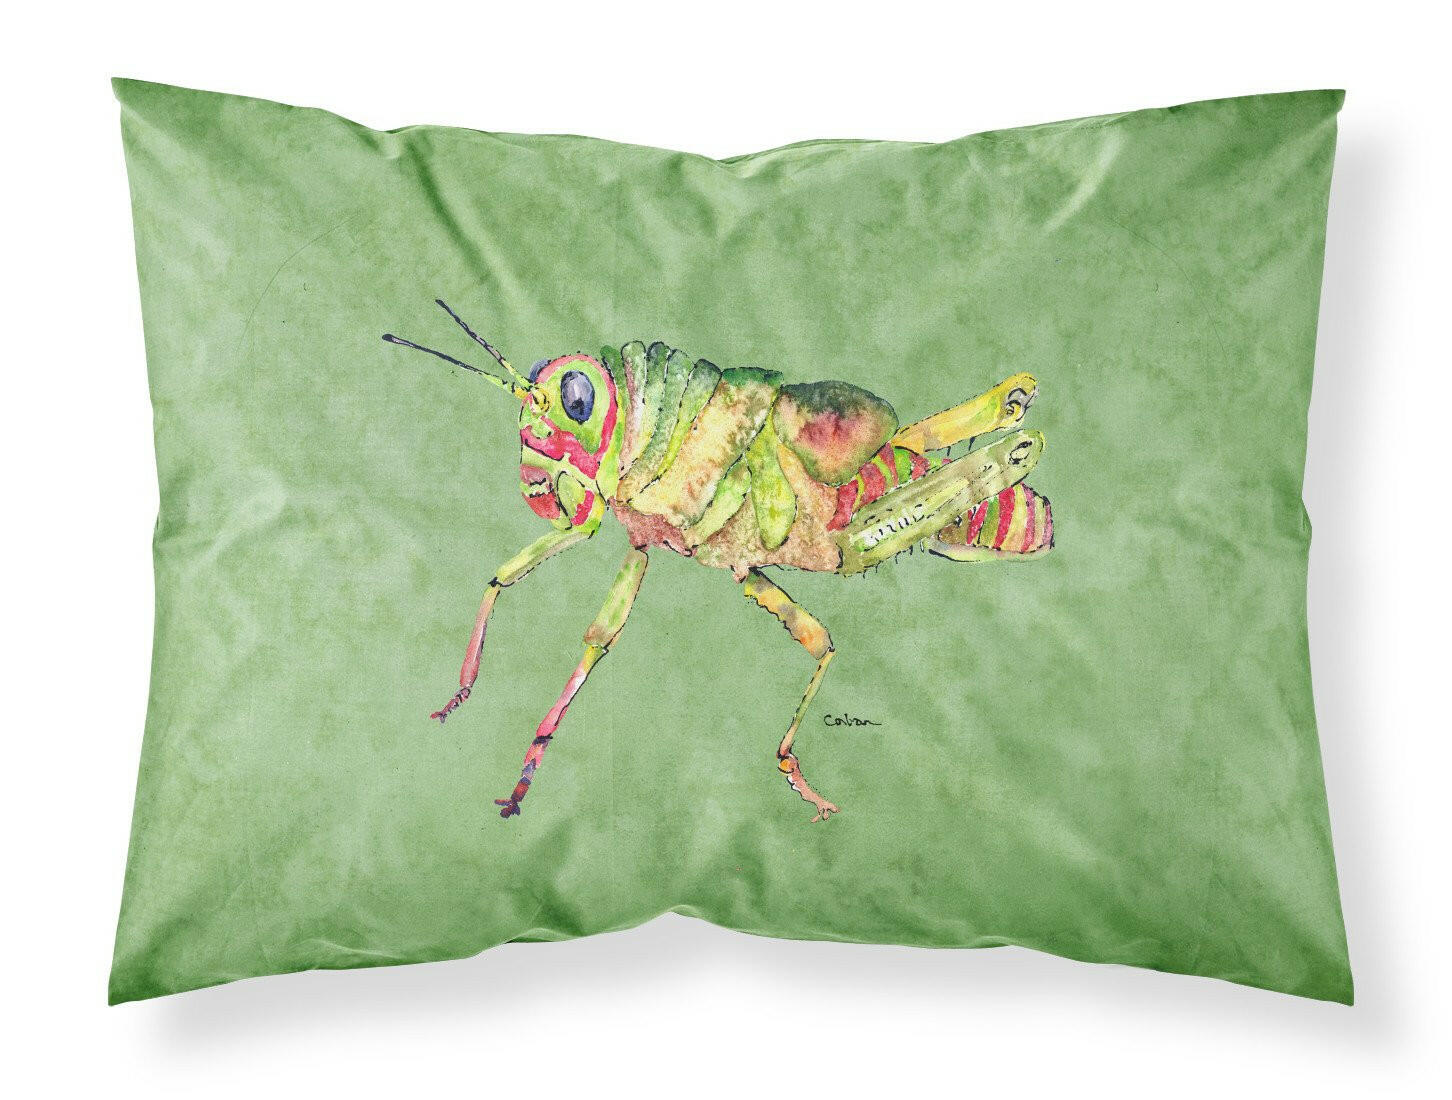 Grasshopper on Avacado Moisture wicking Fabric standard pillowcase by Caroline's Treasures